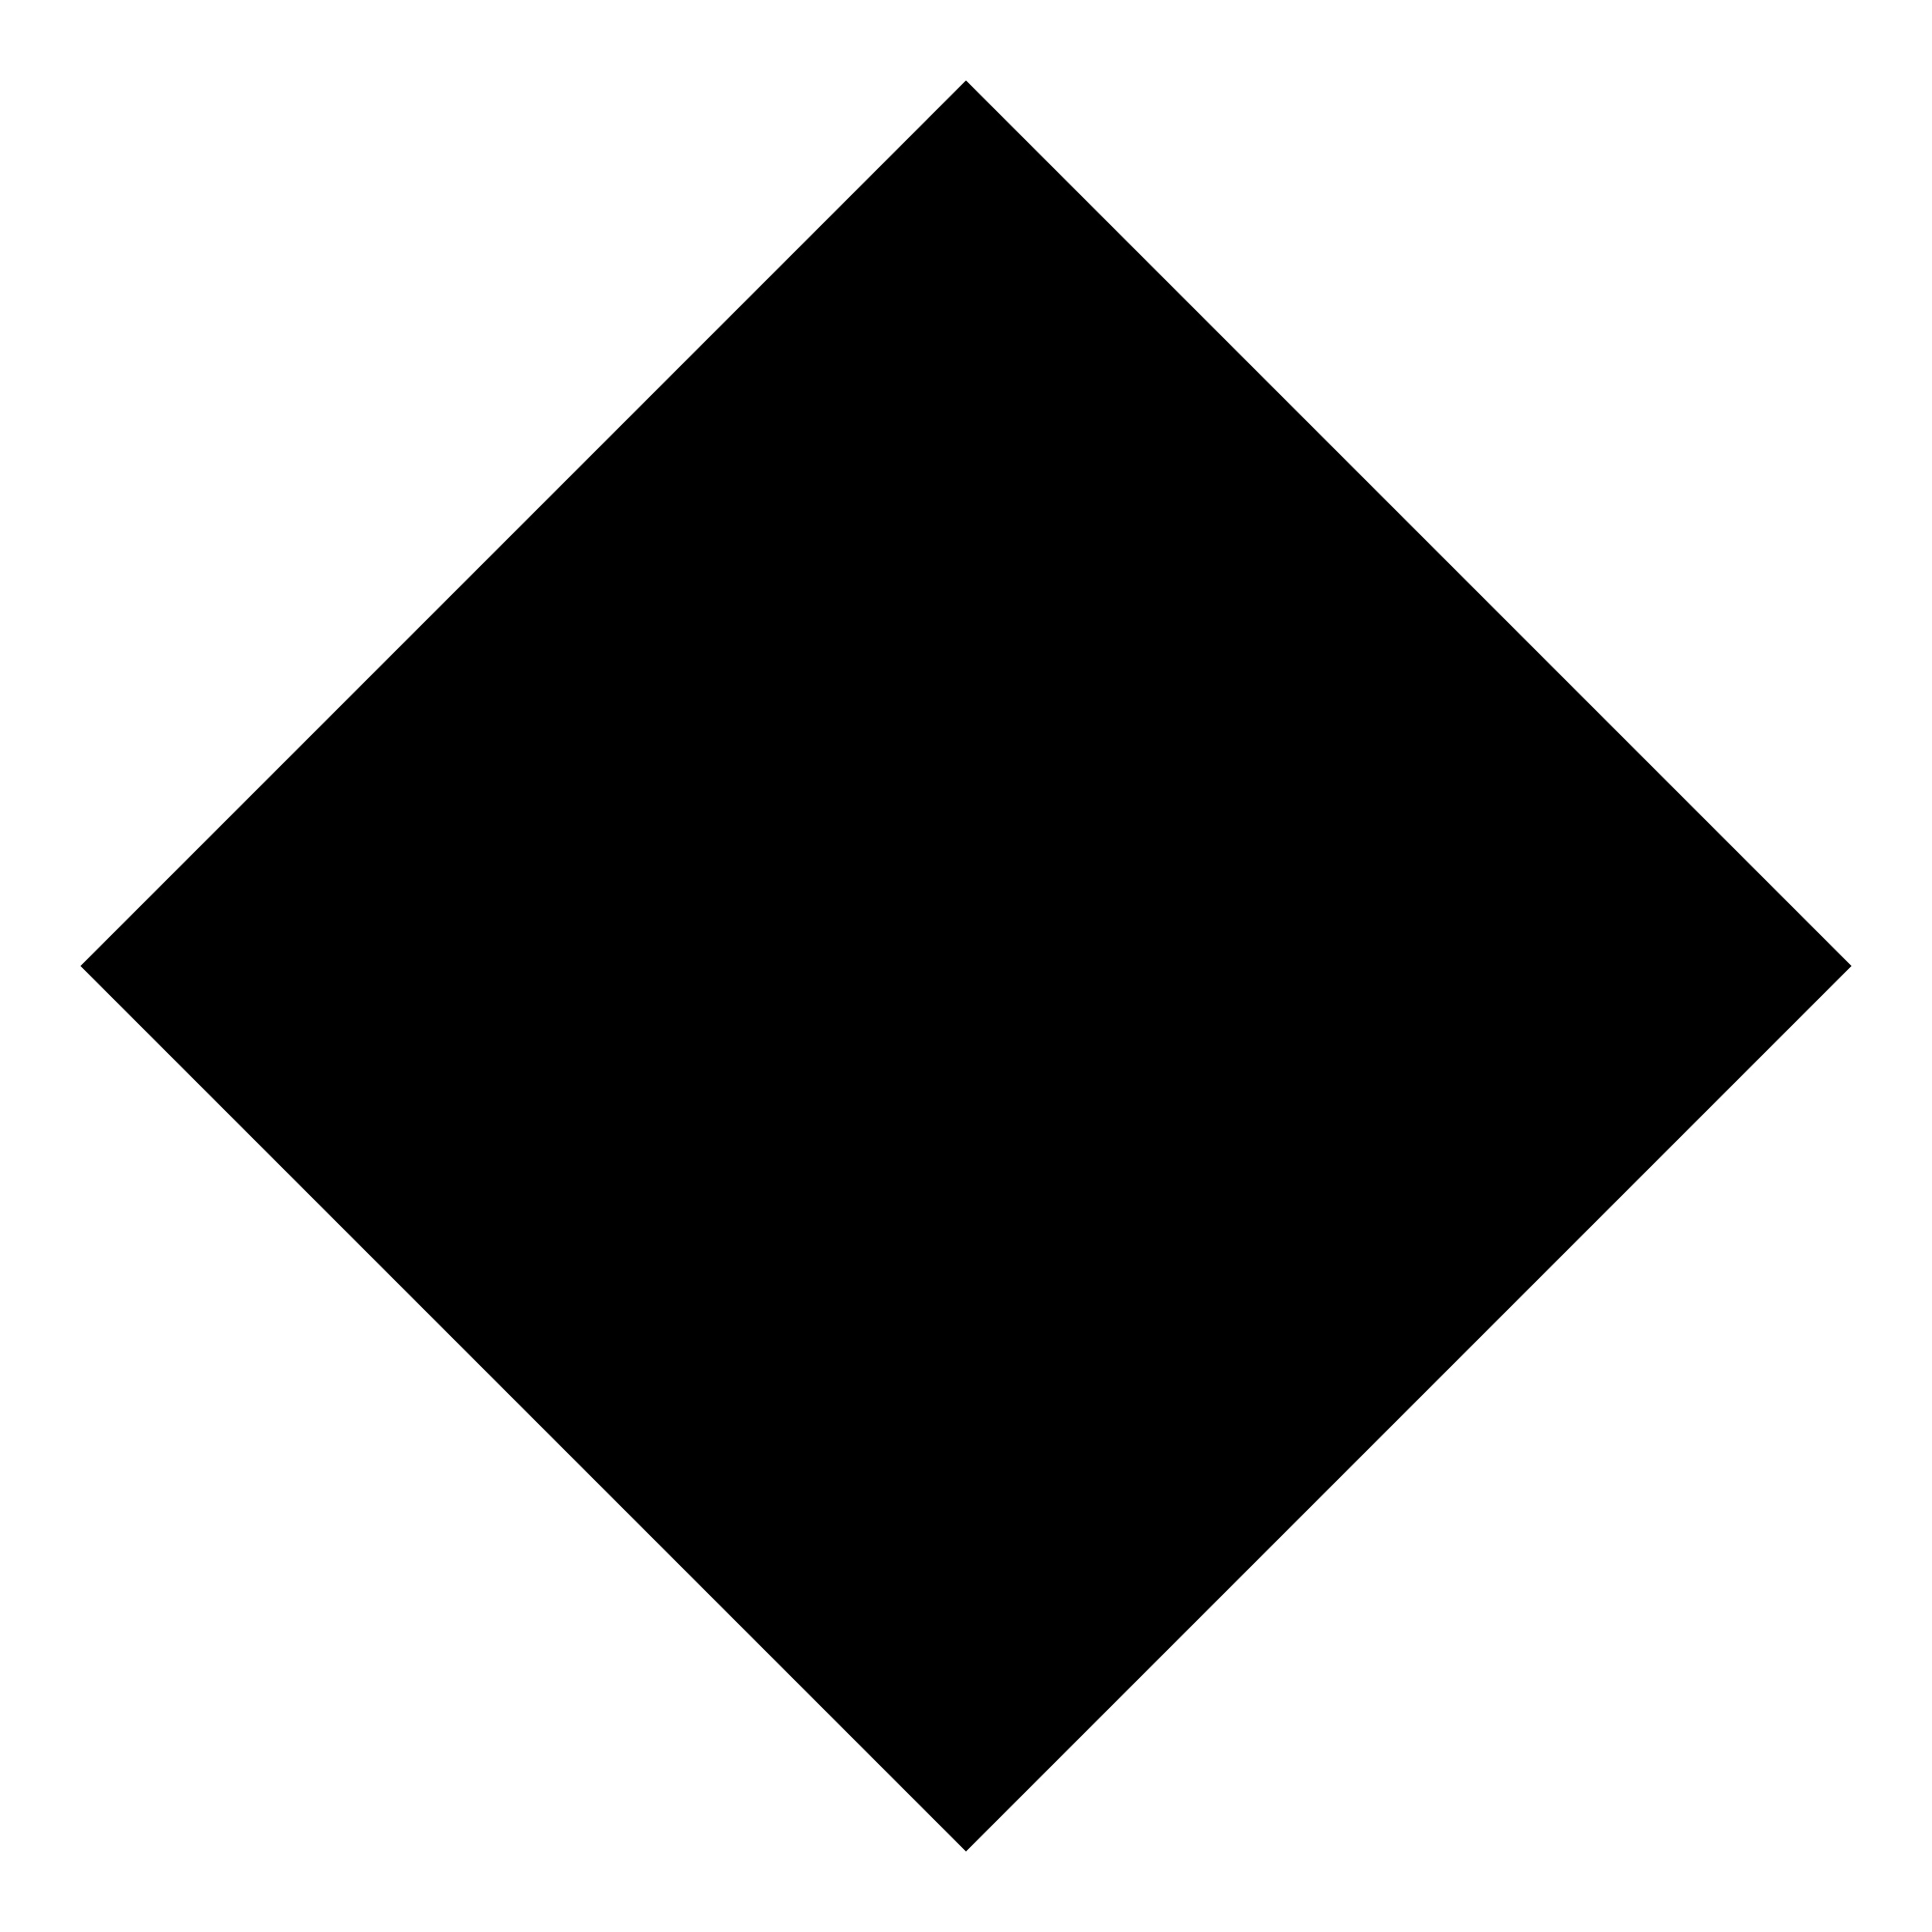 Black and White Diamond Shape Logo - File:Ski trail rating symbol-black diamond.svg - Wikimedia Commons